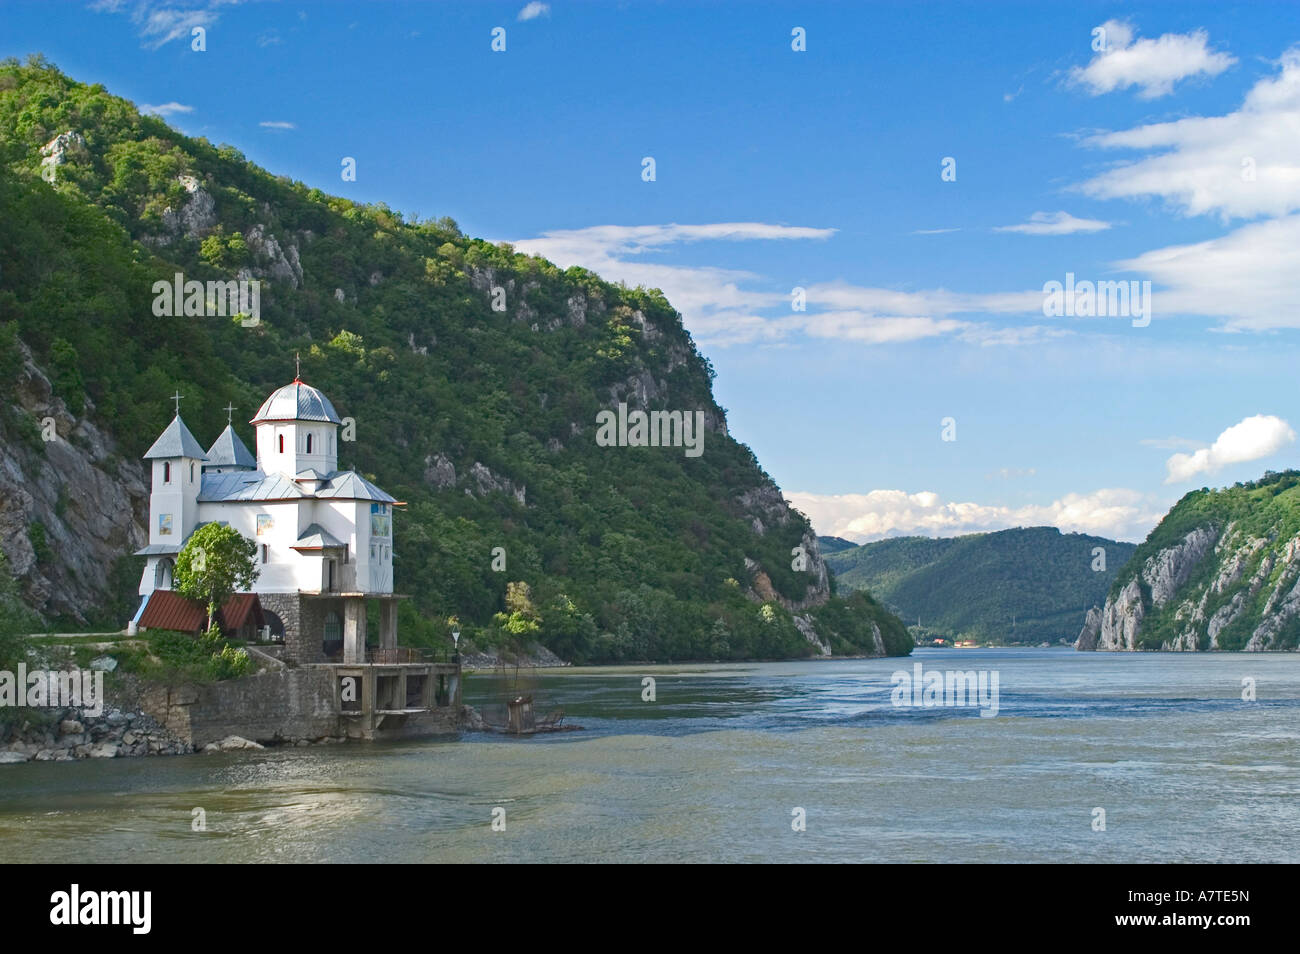 Church at riverbank, Danube river, Romania Stock Photo